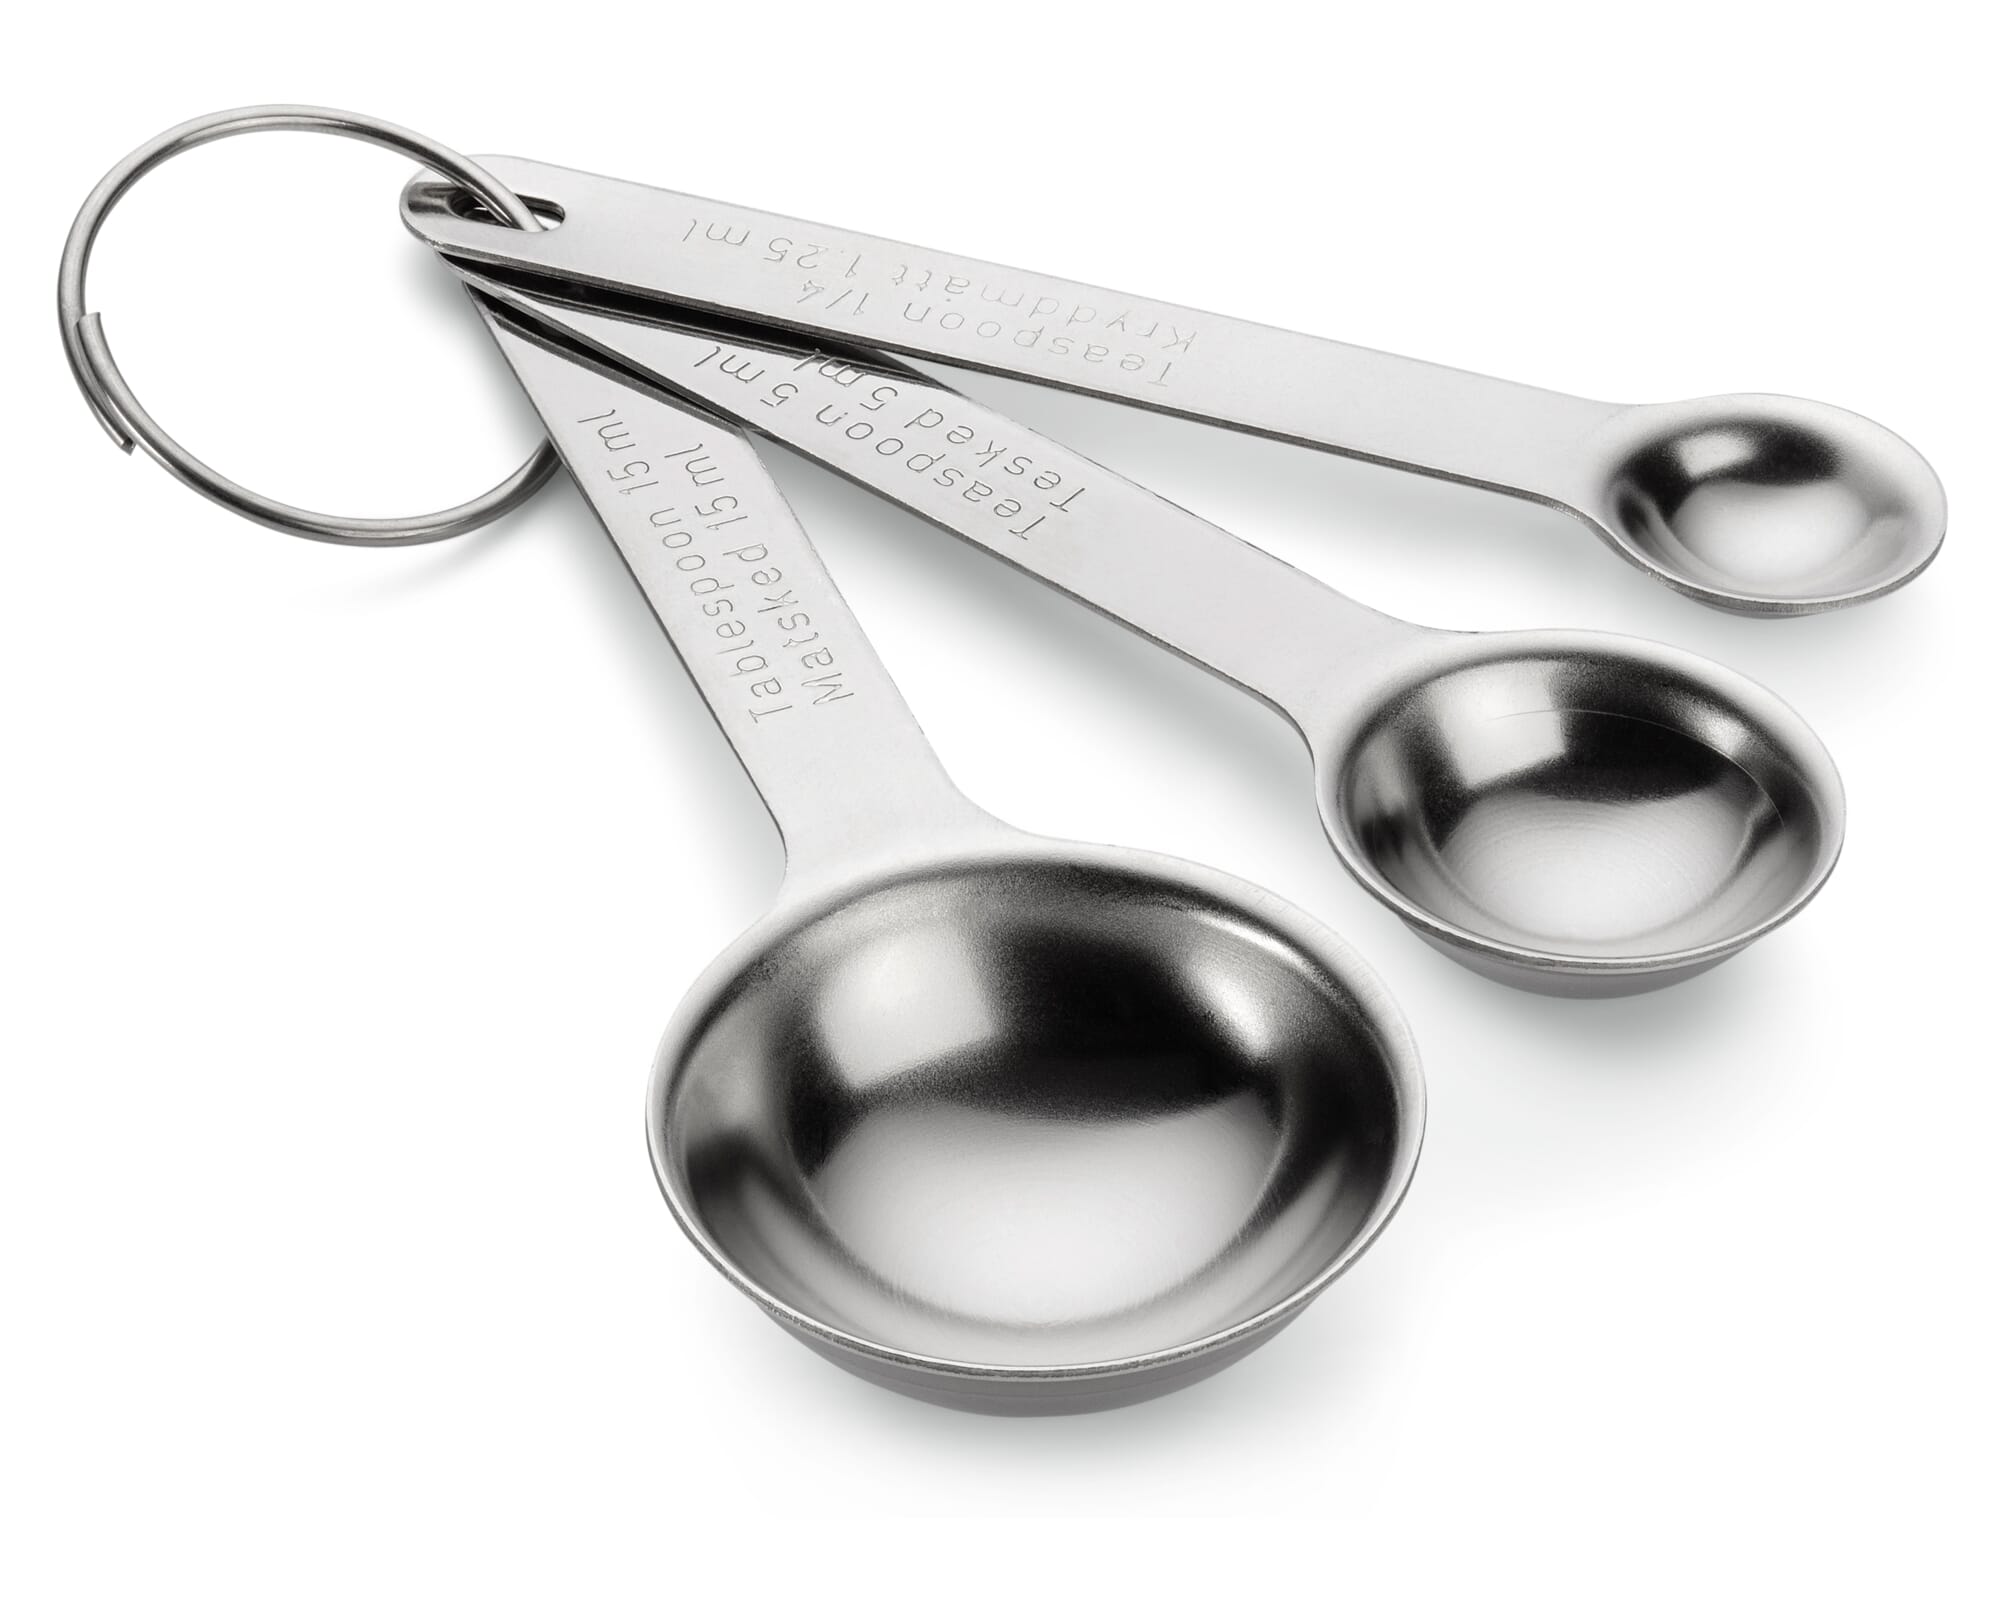 https://assets.manufactum.de/p/066/066908/66908_01.jpg/set-swedish-measuring-spoons.jpg